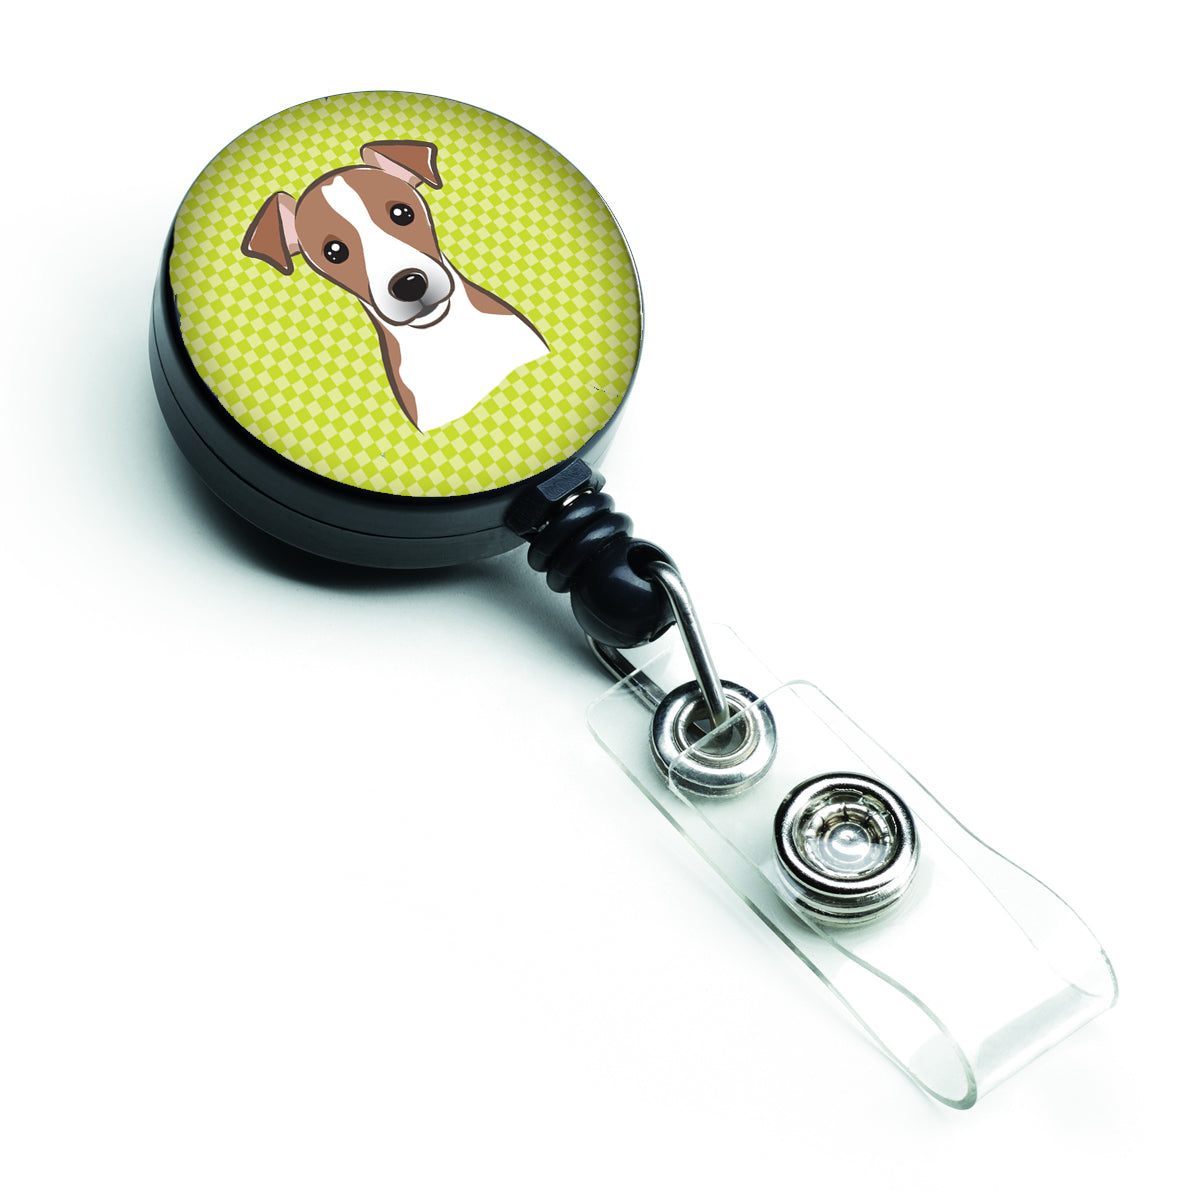 Bobine de badge rétractable Checkerboard vert citron Jack Russell Terrier BB1322BR